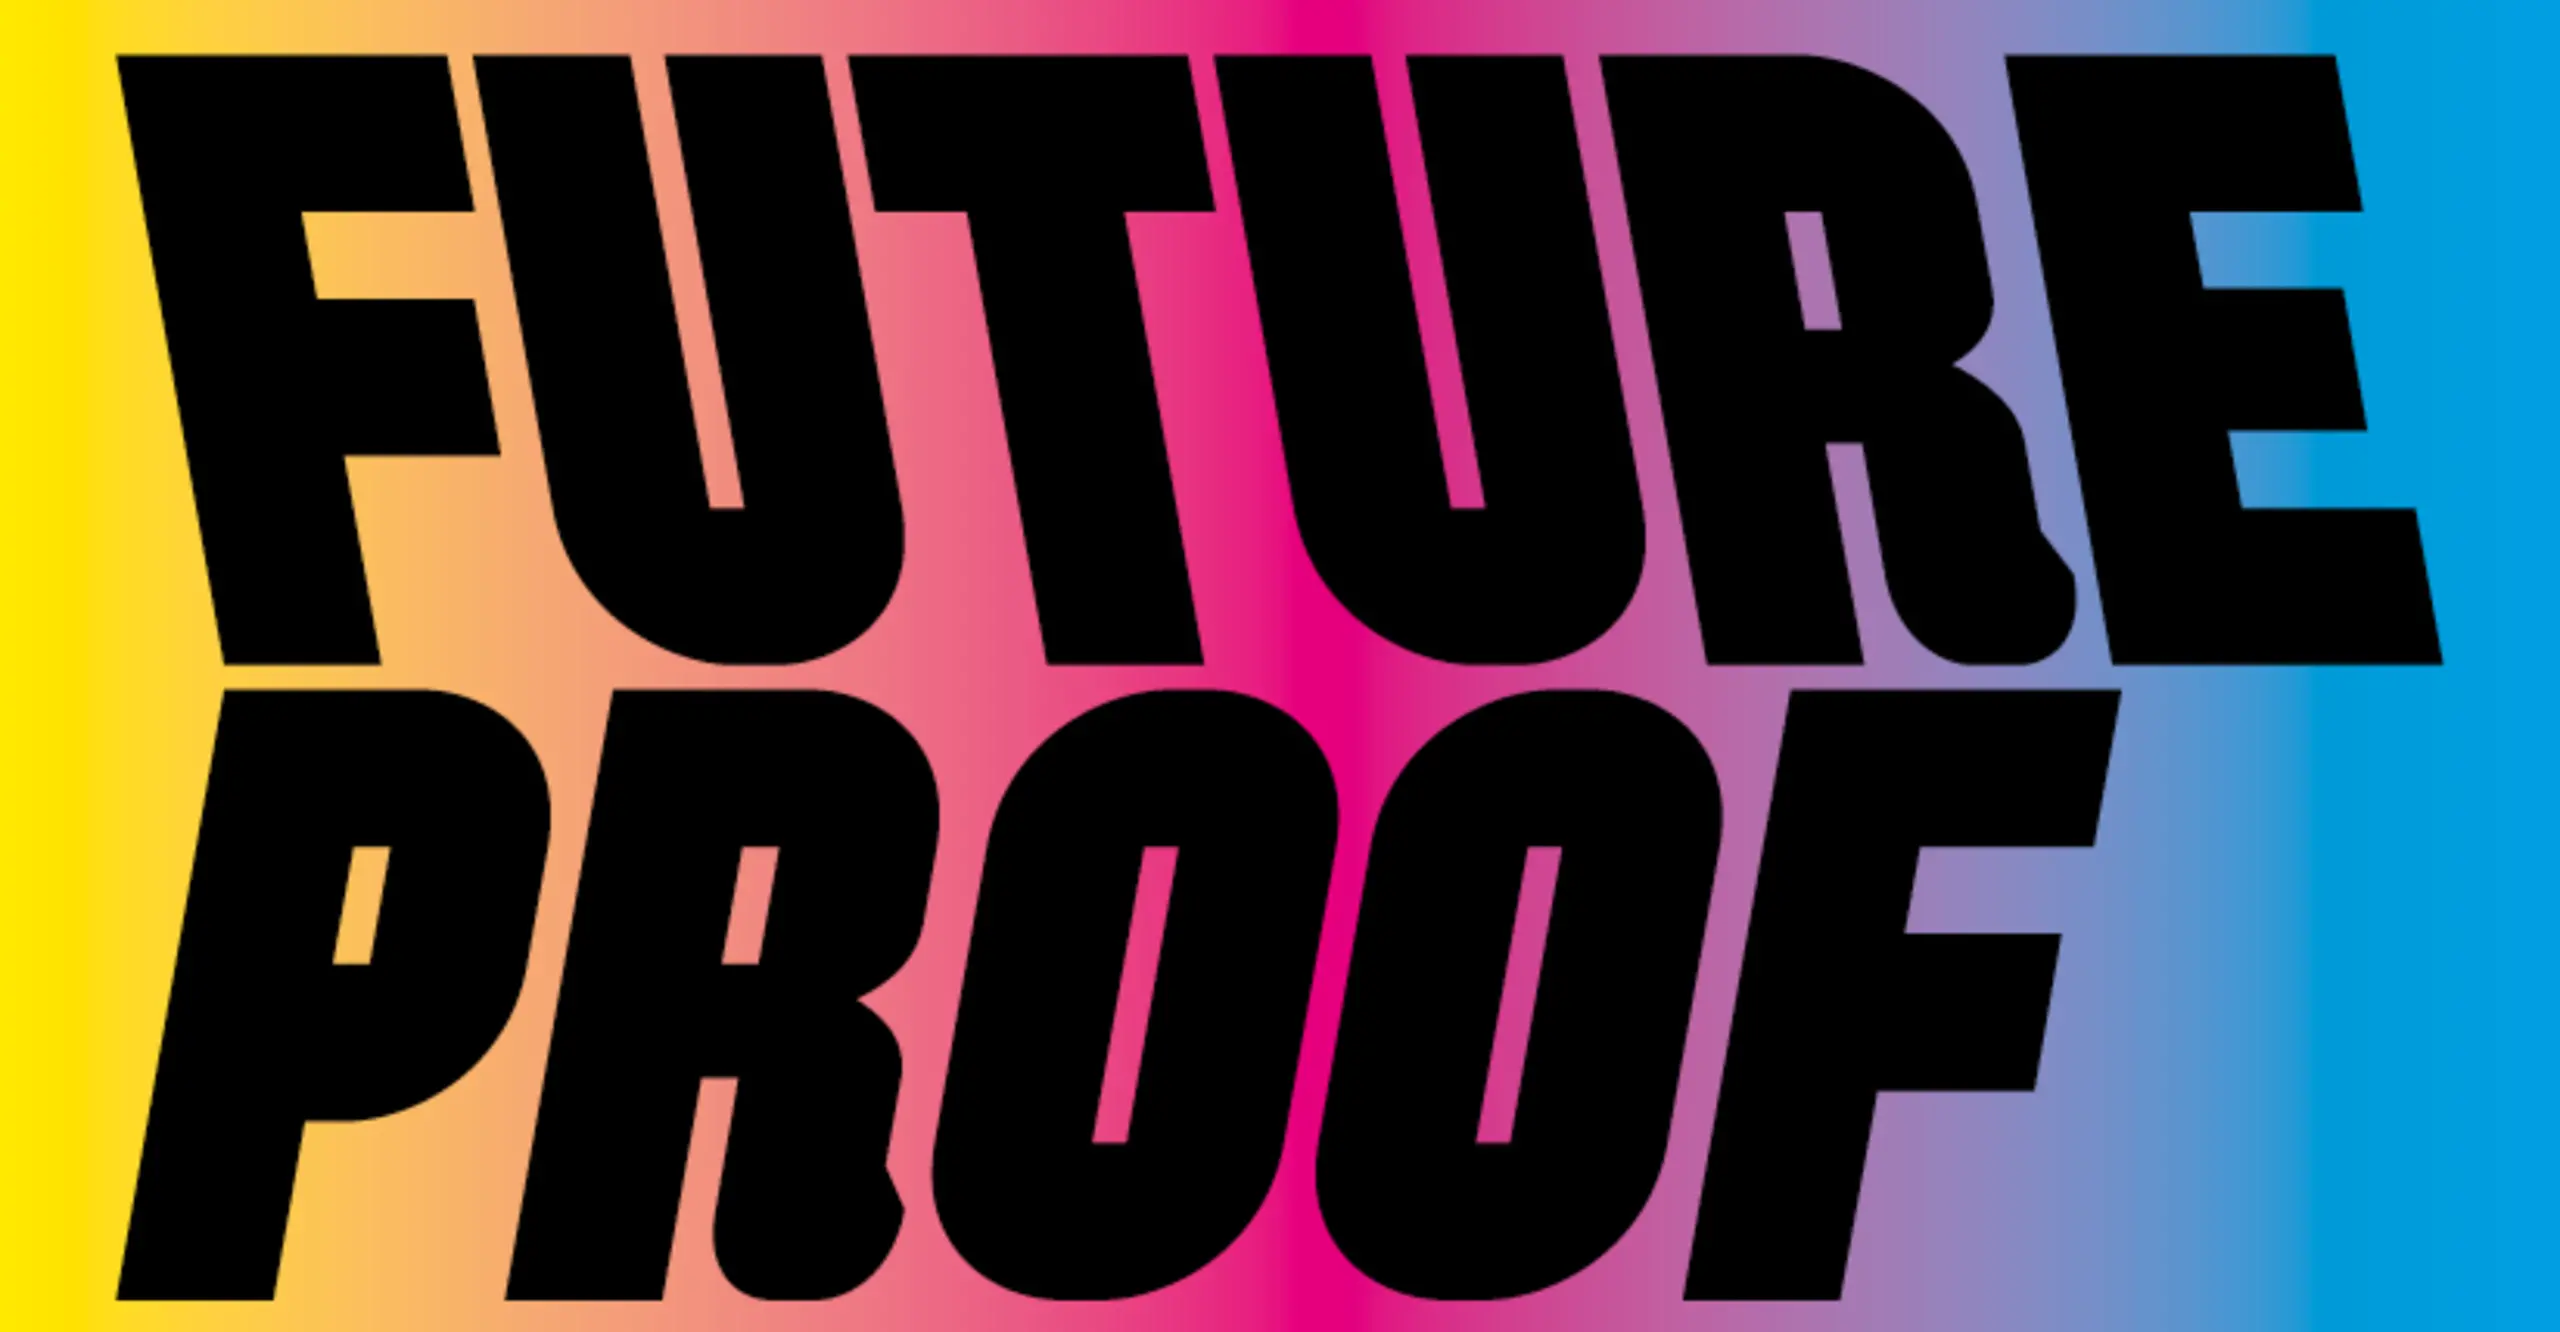 FutureProof